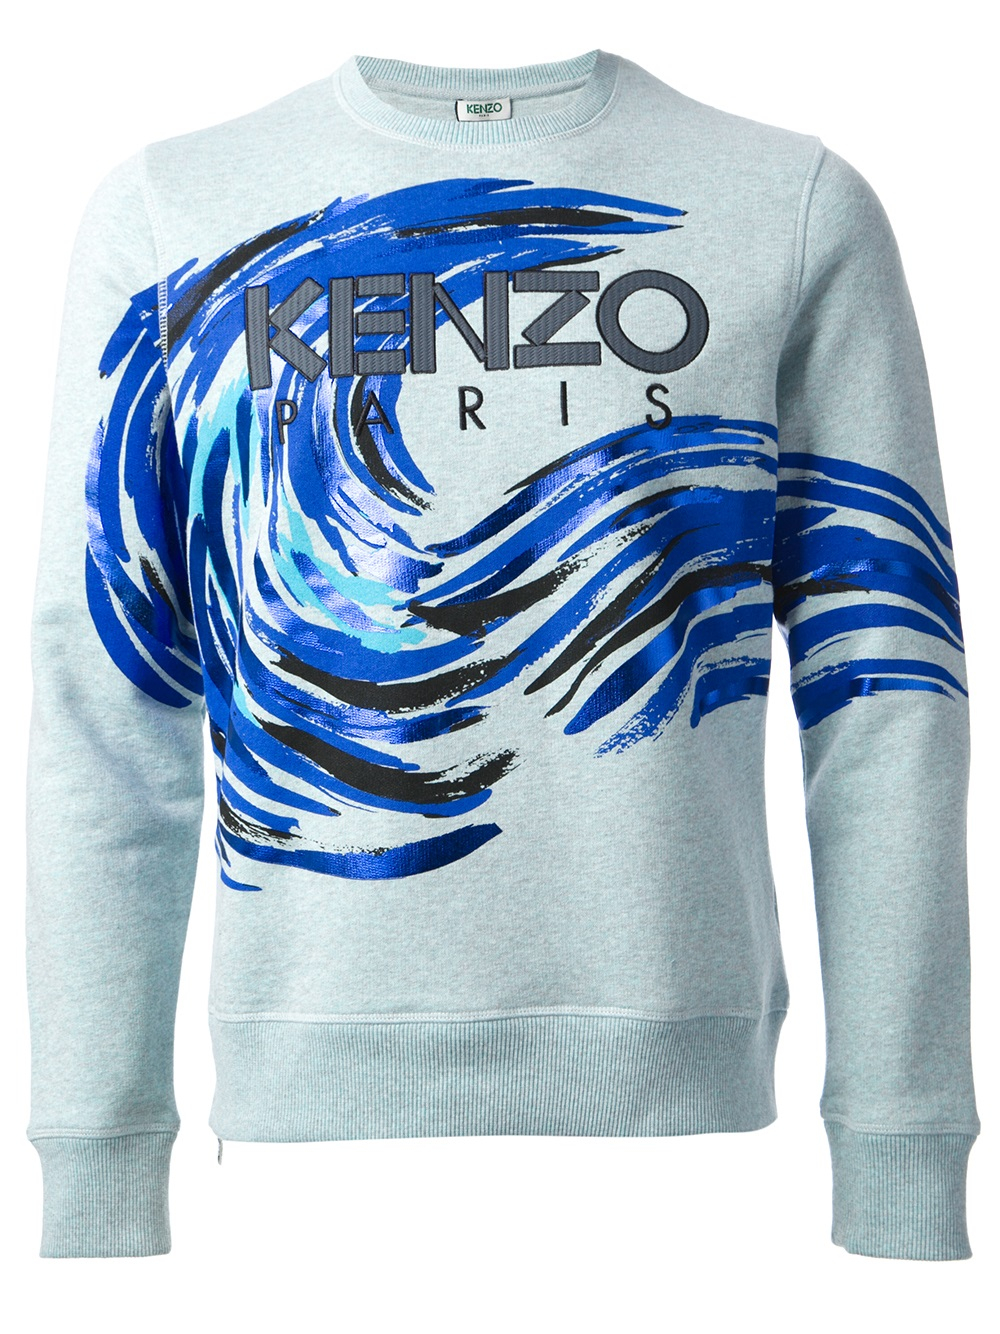 KENZO Wave Print Sweatshirt in Blue for Men - Lyst